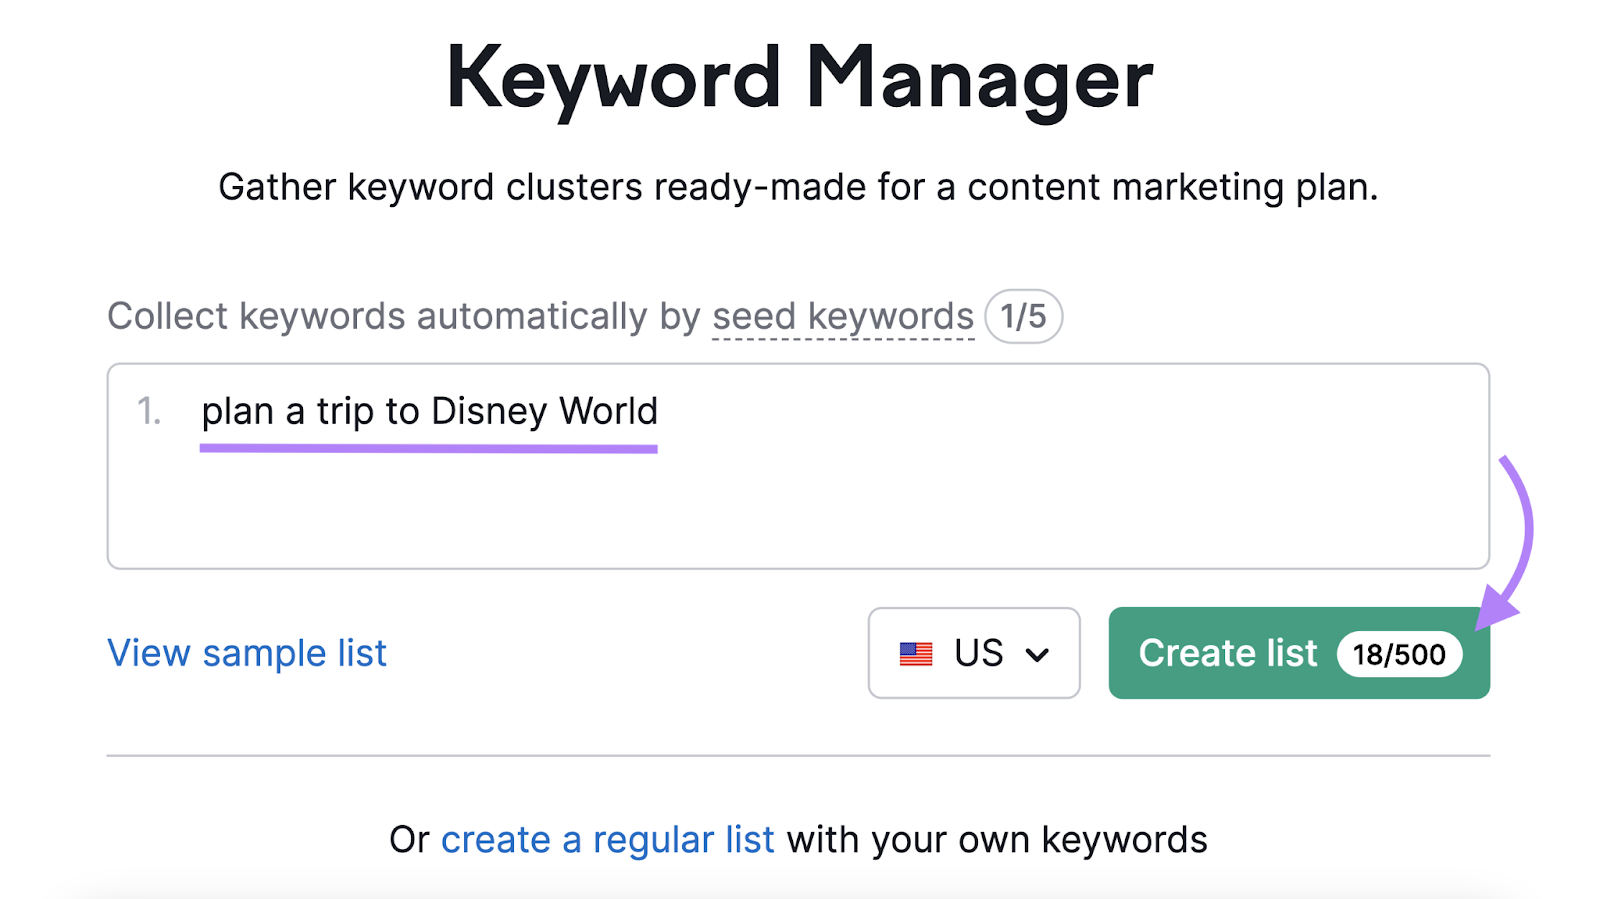 "plan a travel   to Disney World" keyword entered into the Keyword Manager tool